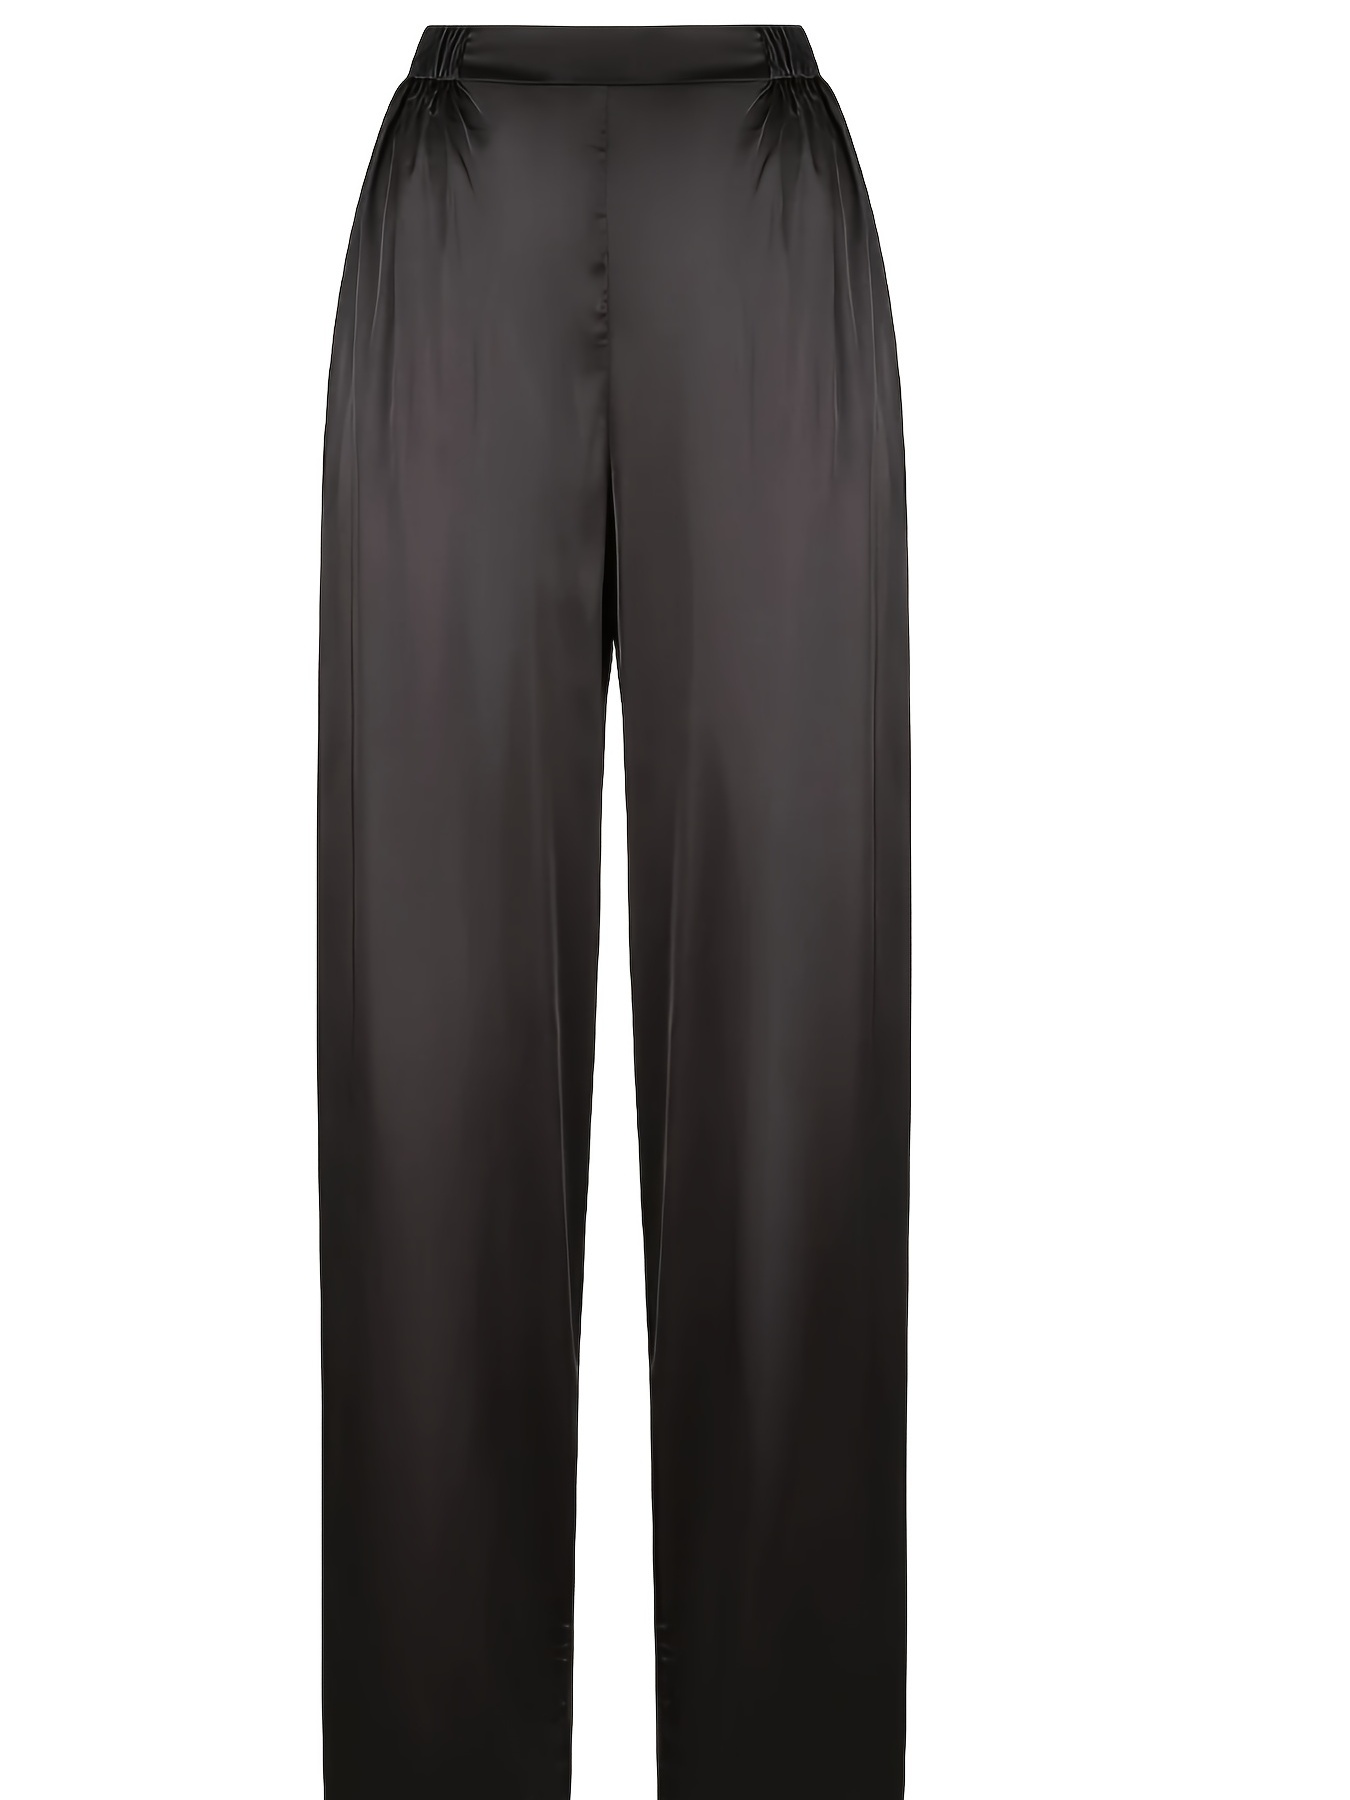 LANBAOSI Women Ultra-Soft Comfy Stretch Pajama Lounge Pants Female Elegant  Sleepwear Size Small 